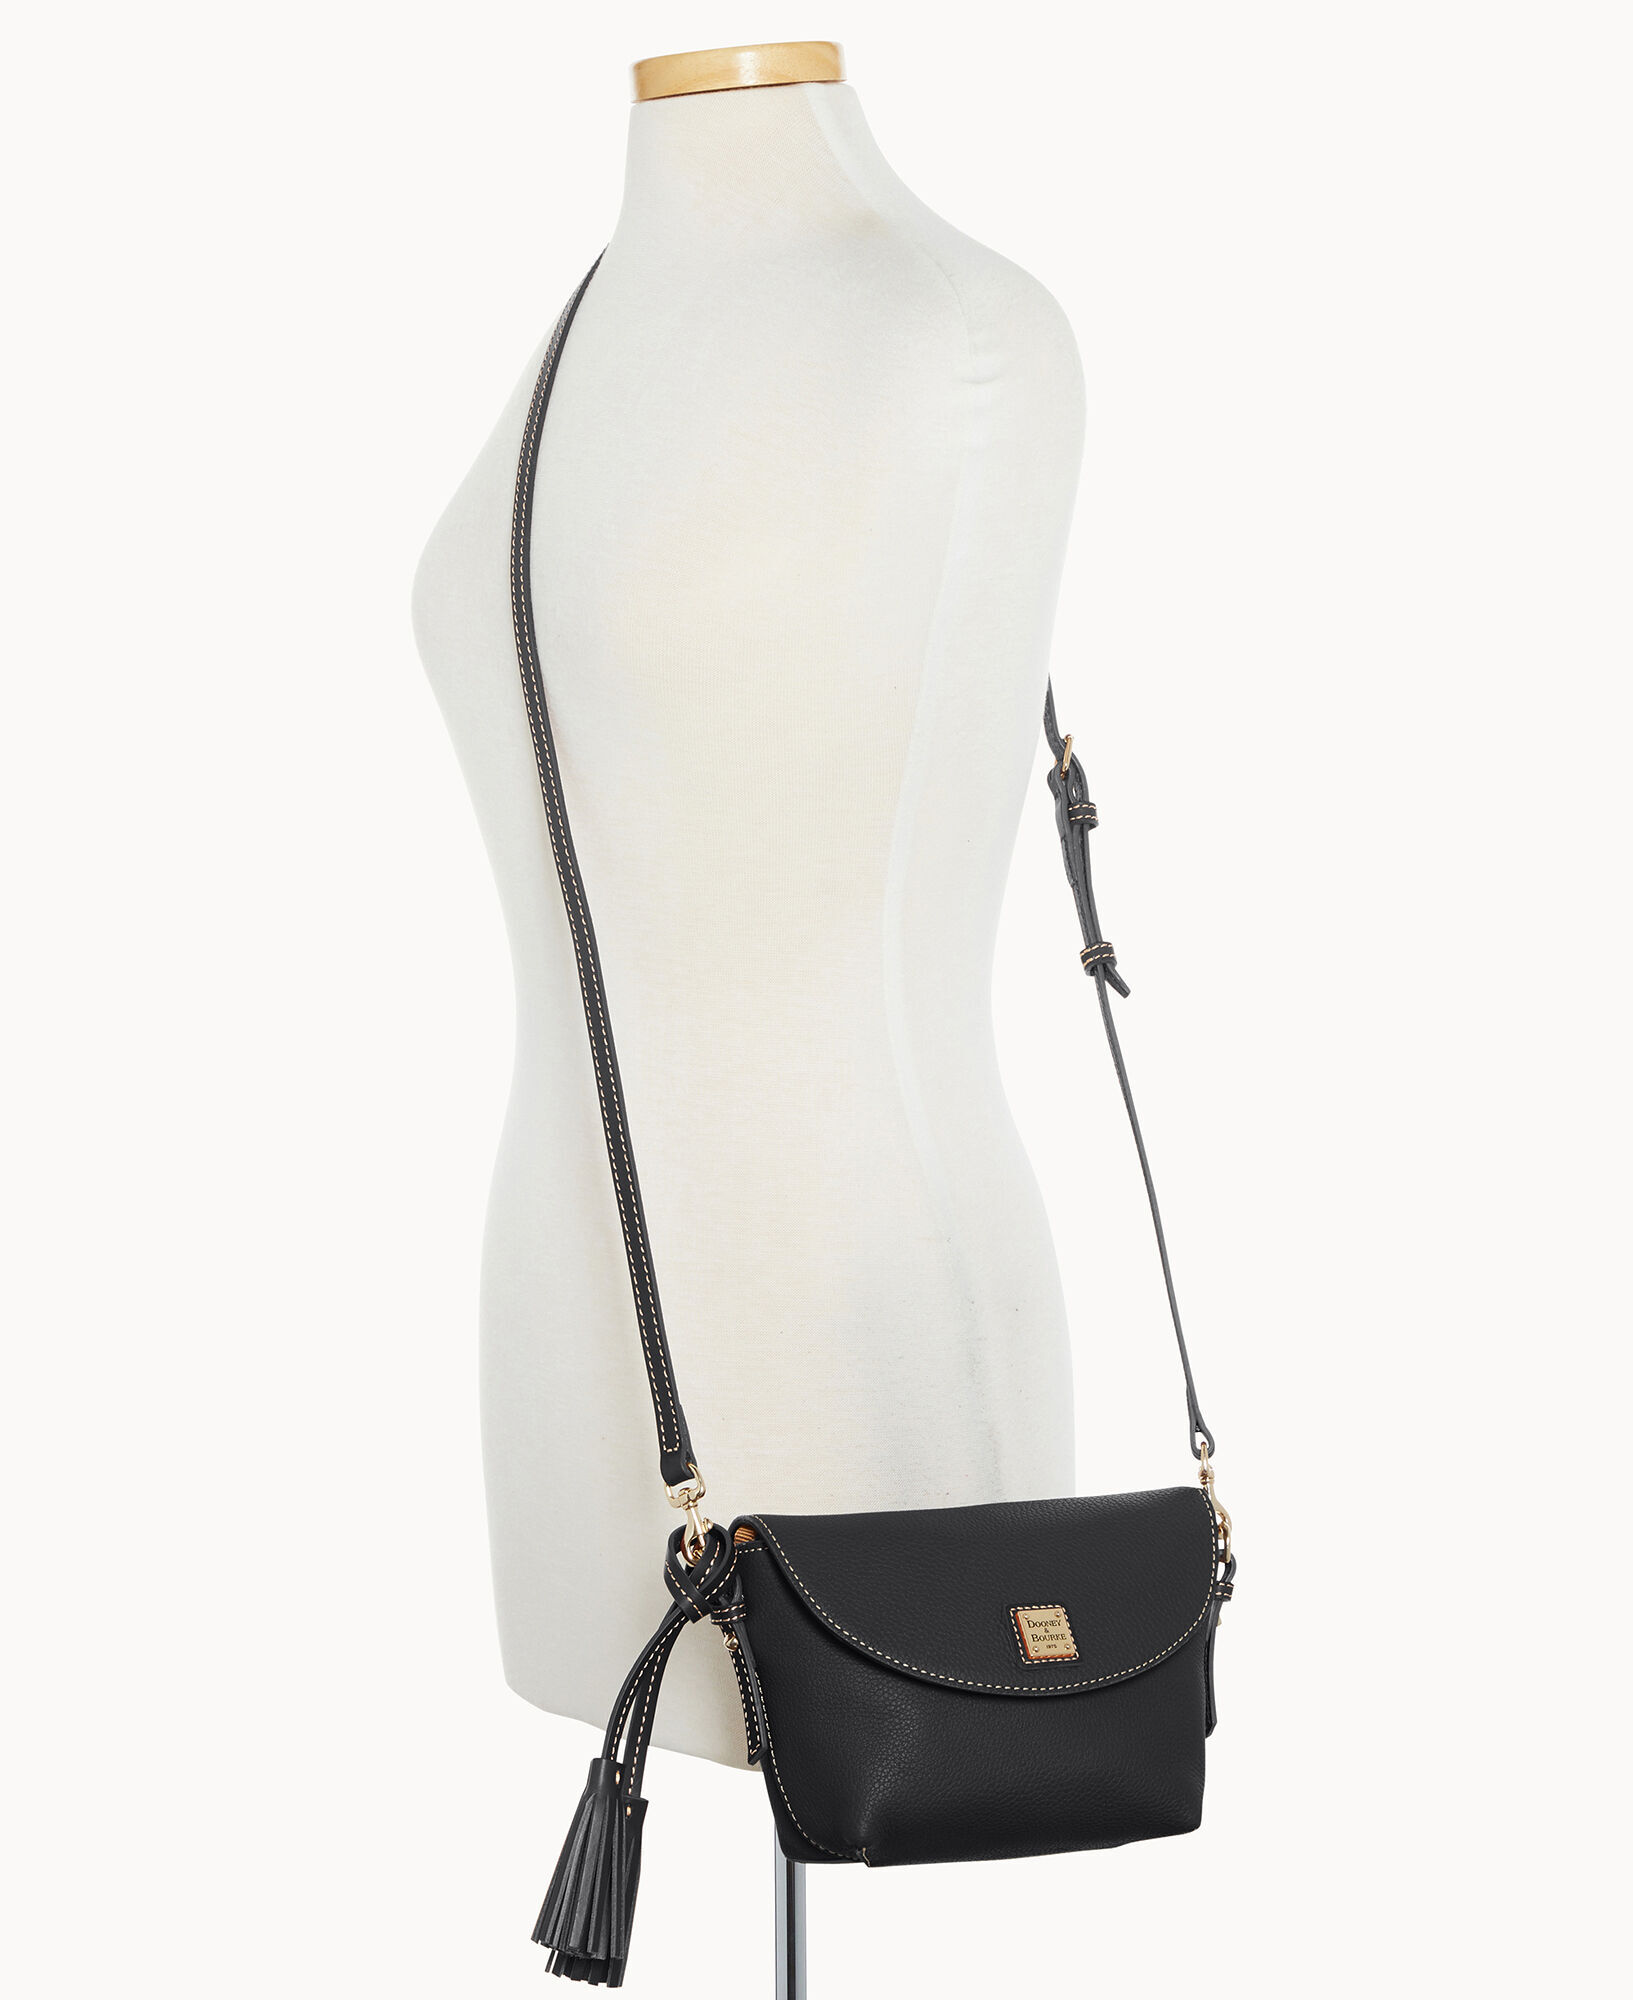 Dooney & Bourke Handbag, Saffiano Saddle Bag Crossbody - Black: Handbags